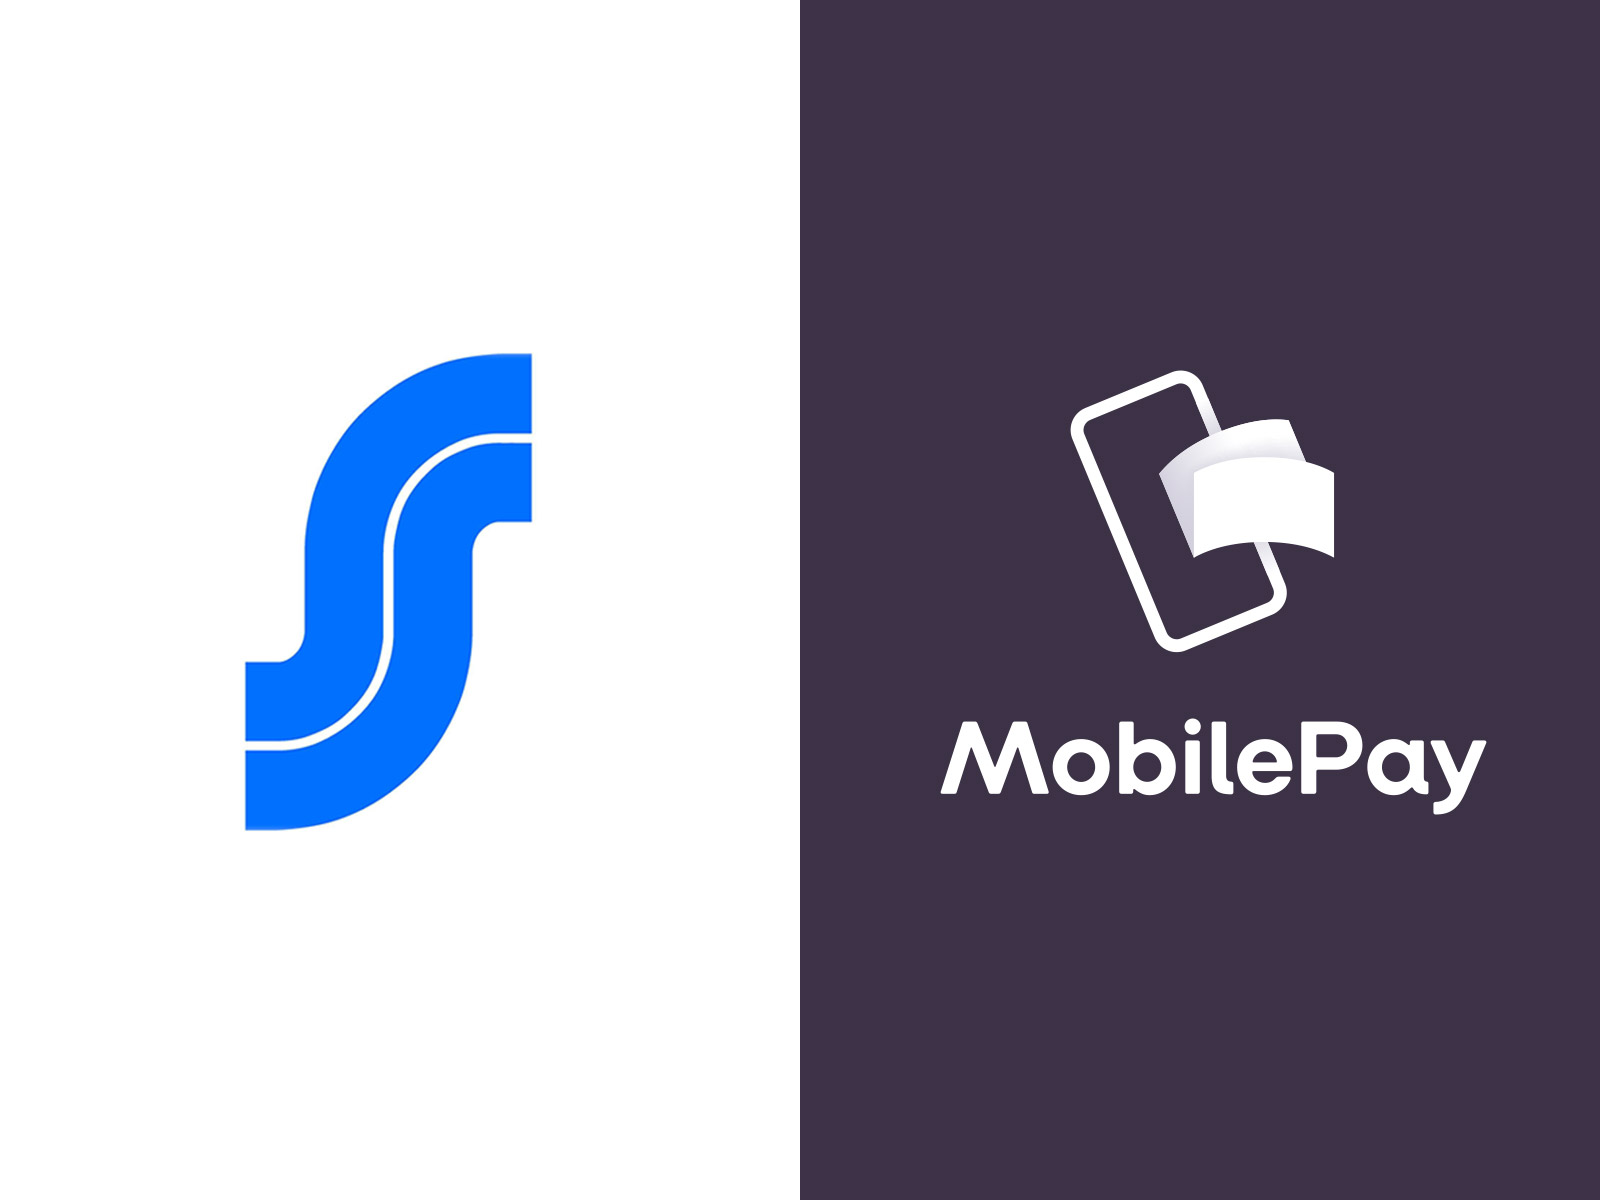 S-ryhmän ja MobilePayn logot